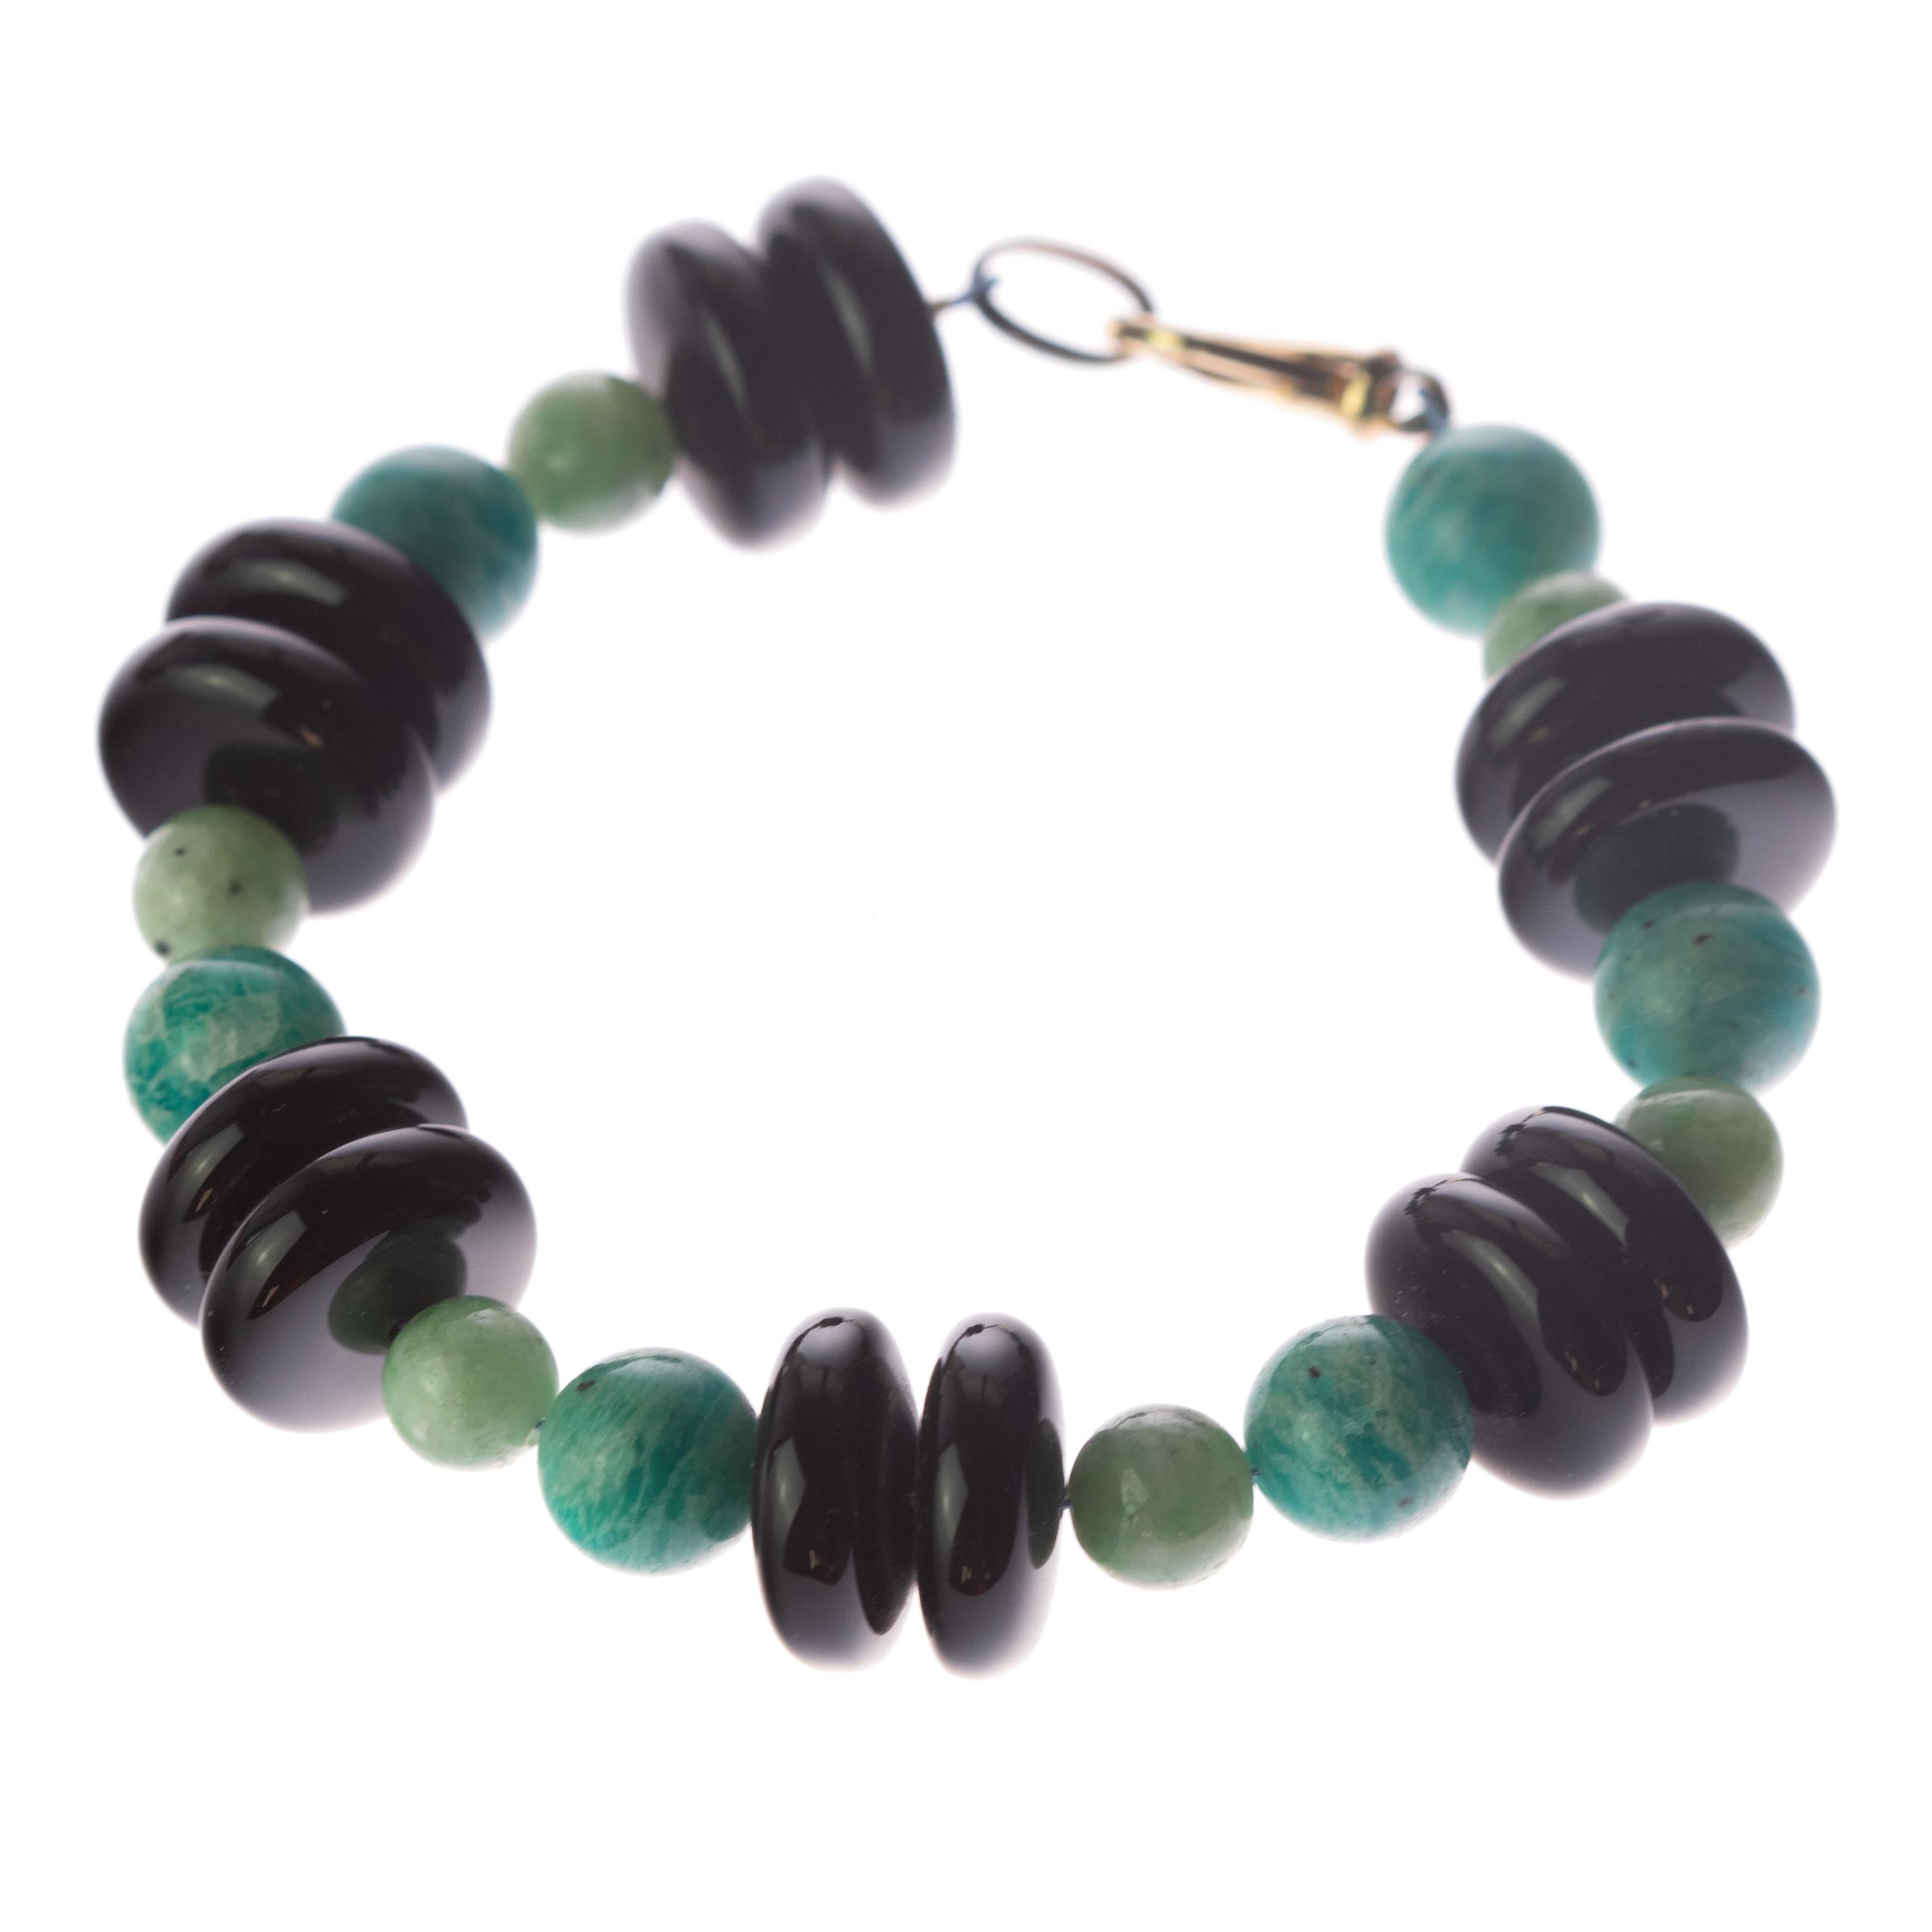 Beautiful China jade Chinese natural jade beads bracelet 